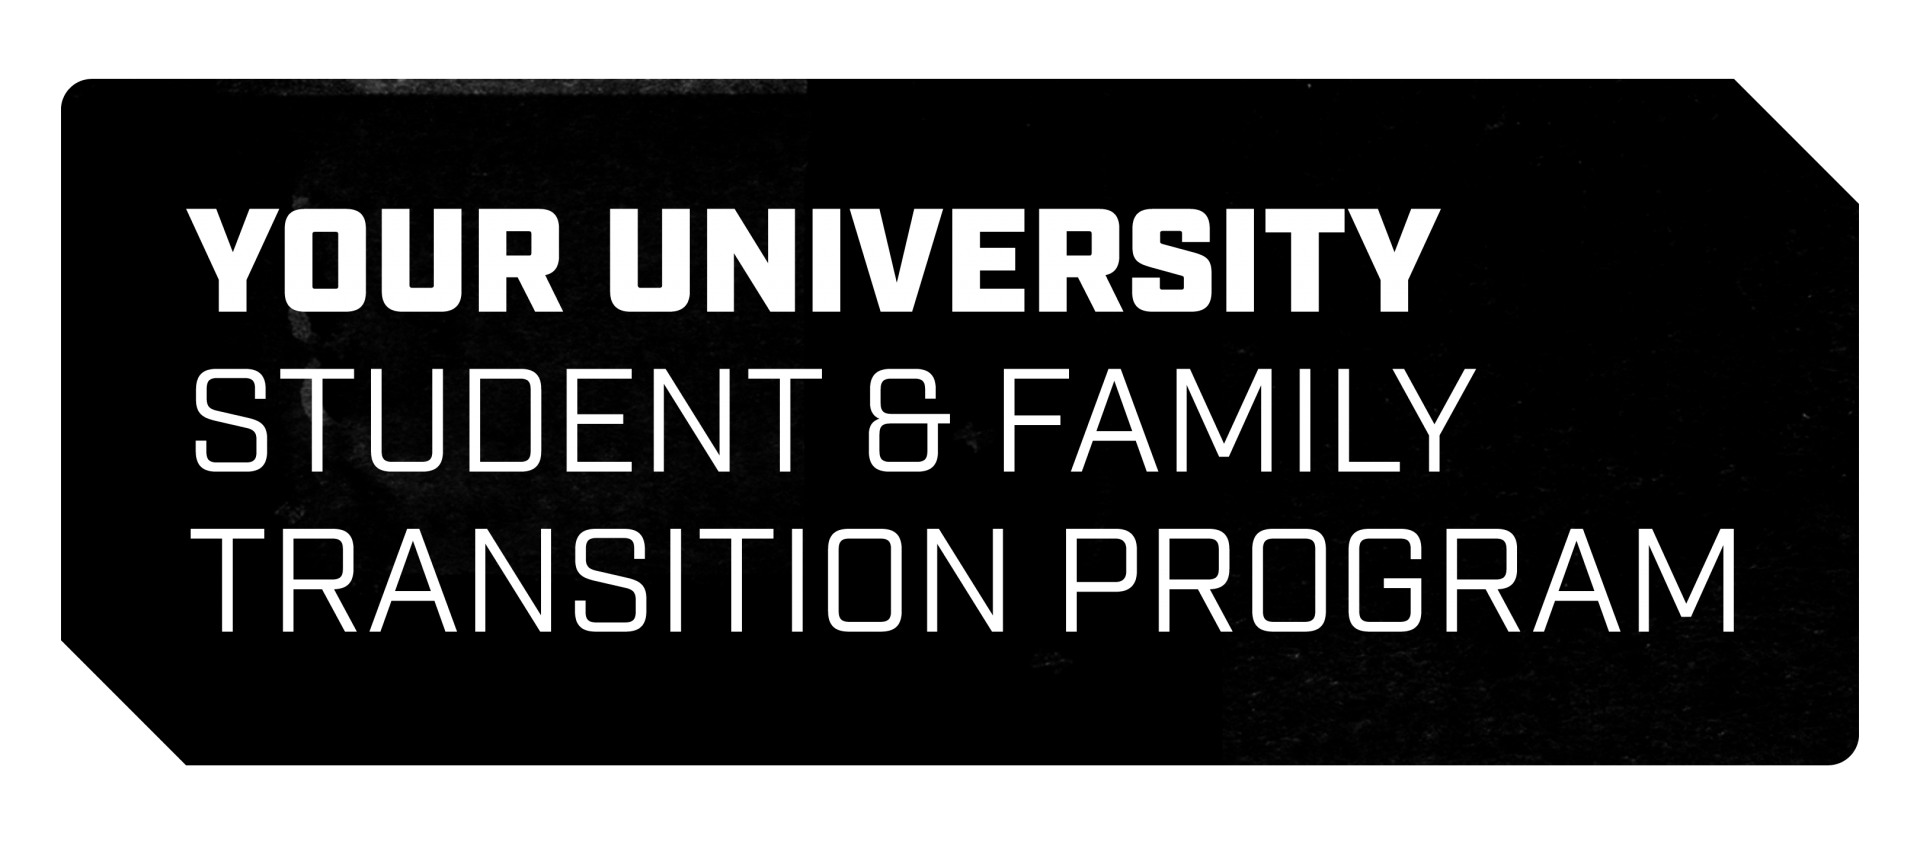 Your University Student & Family Transition Program